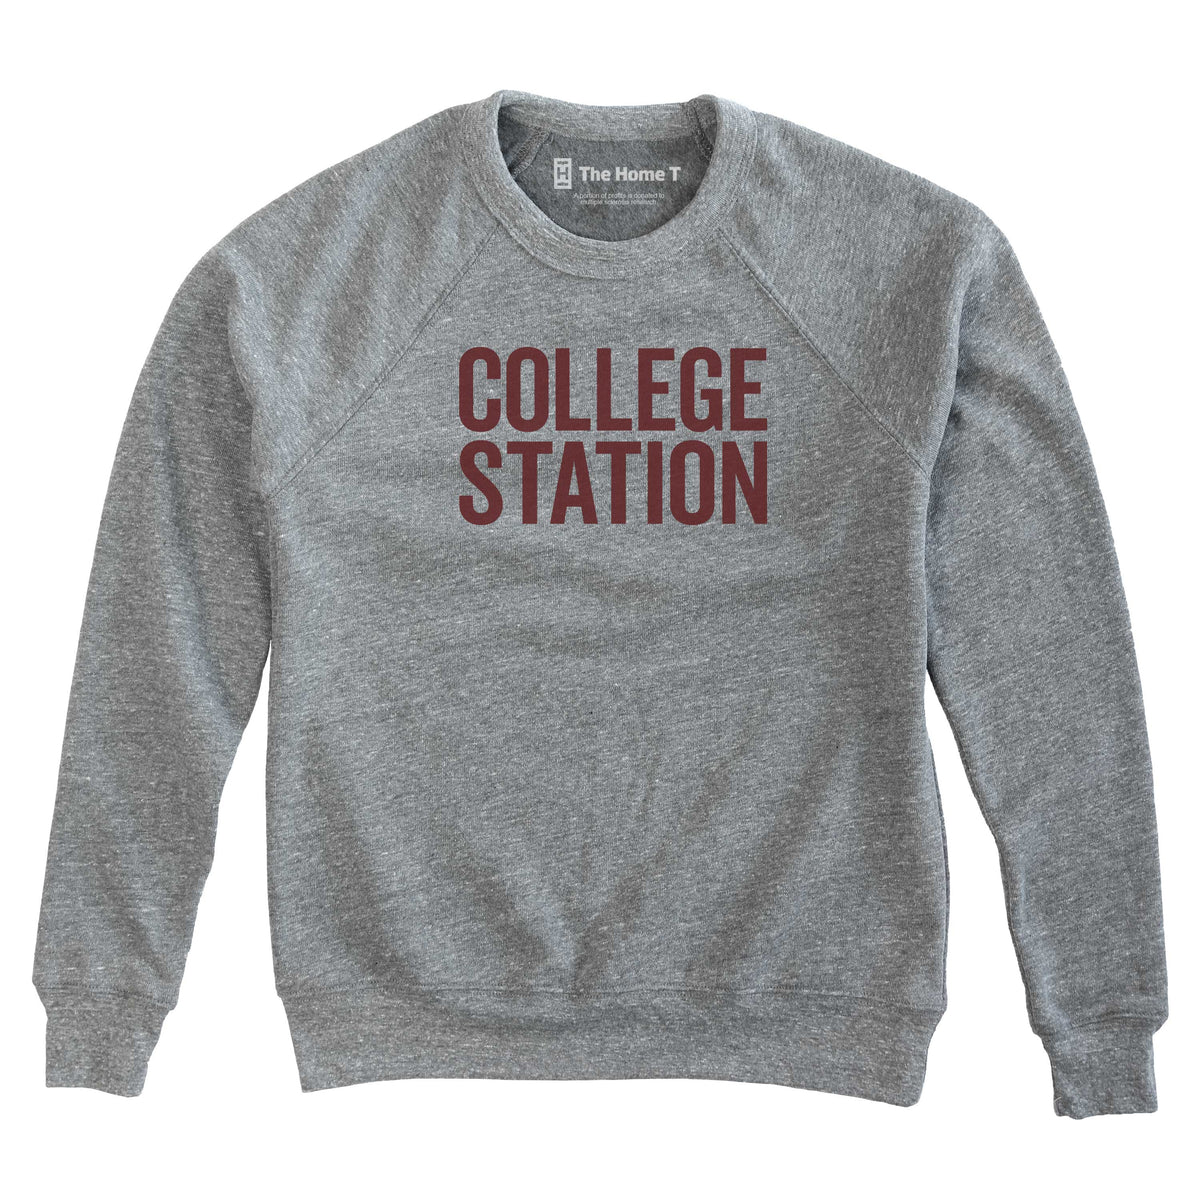 College Station Crew neck The Home T XS Sweatshirt